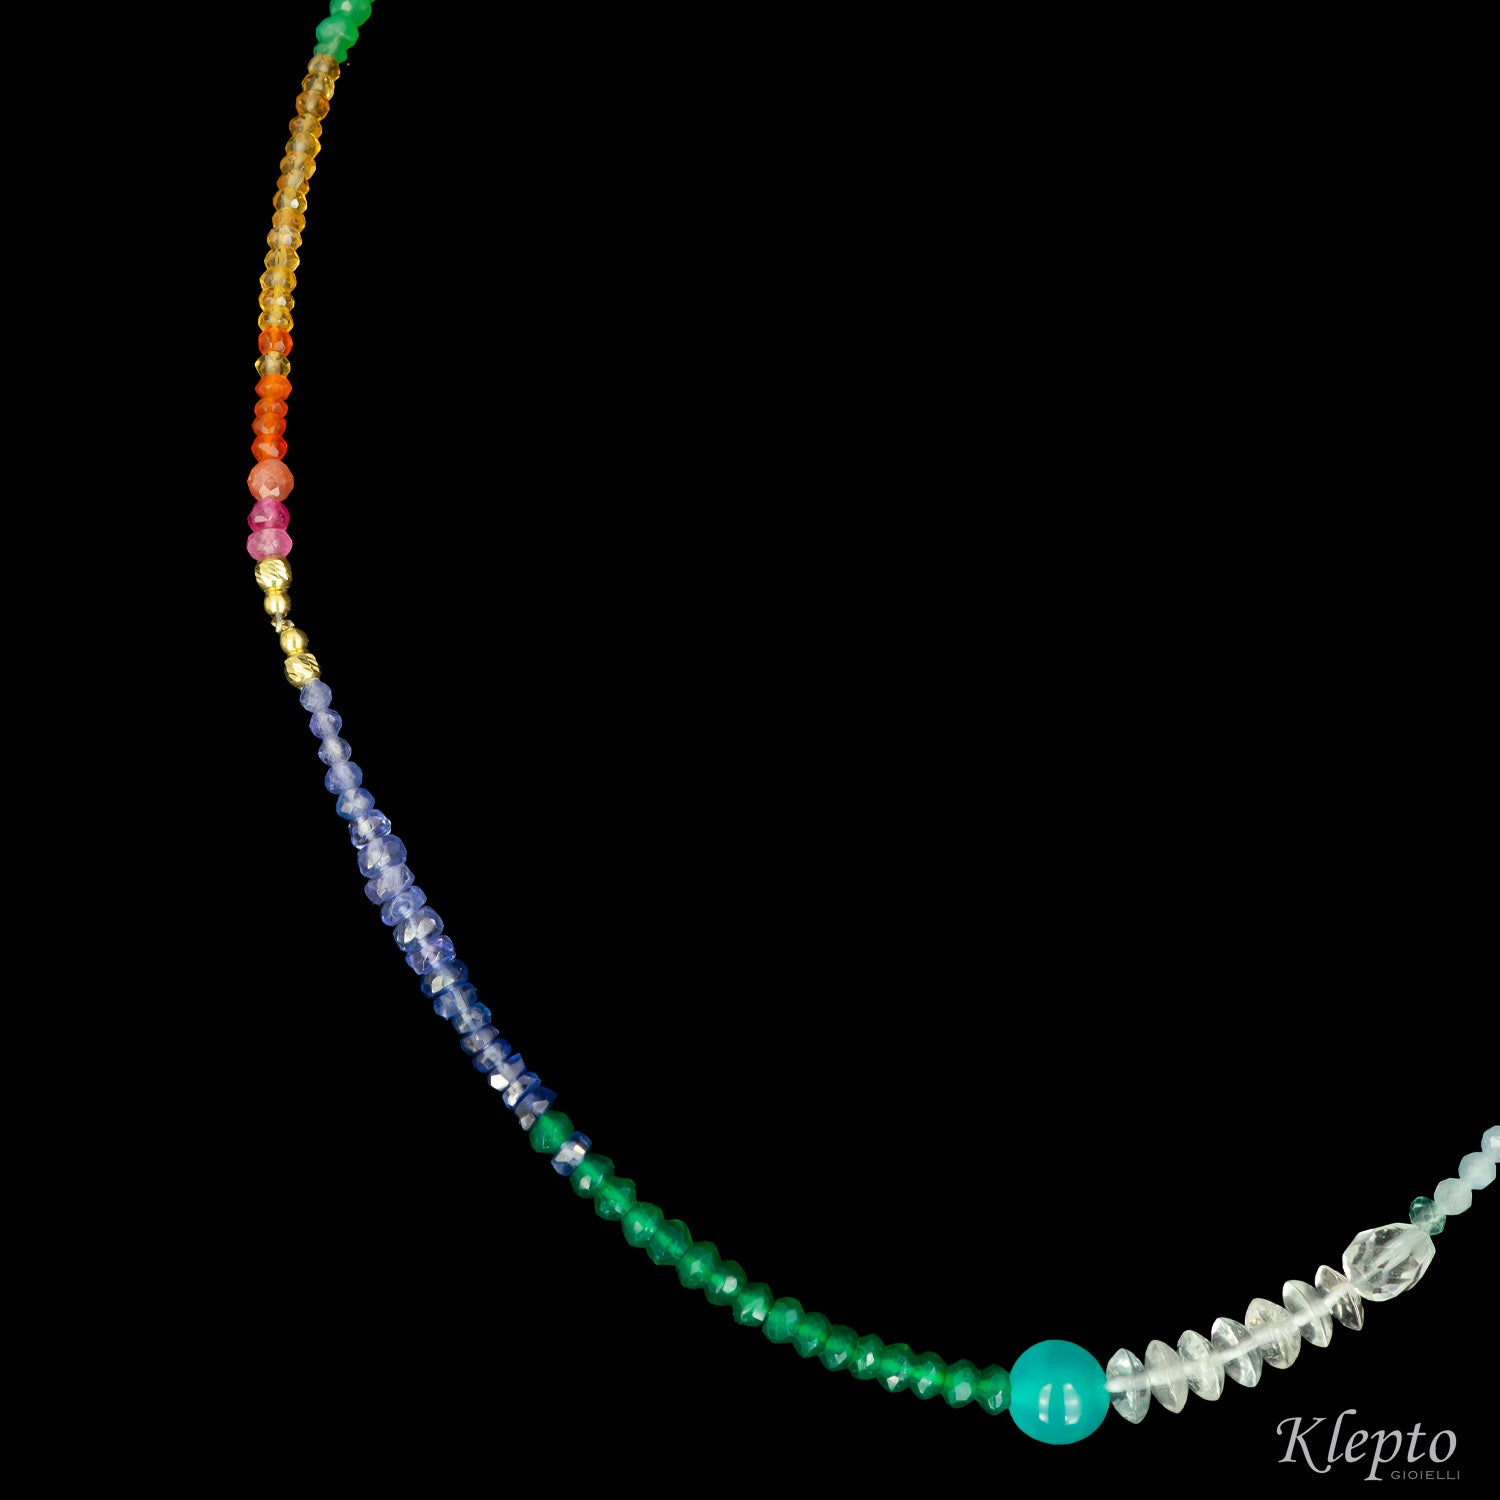 Short Rainbow Necklace